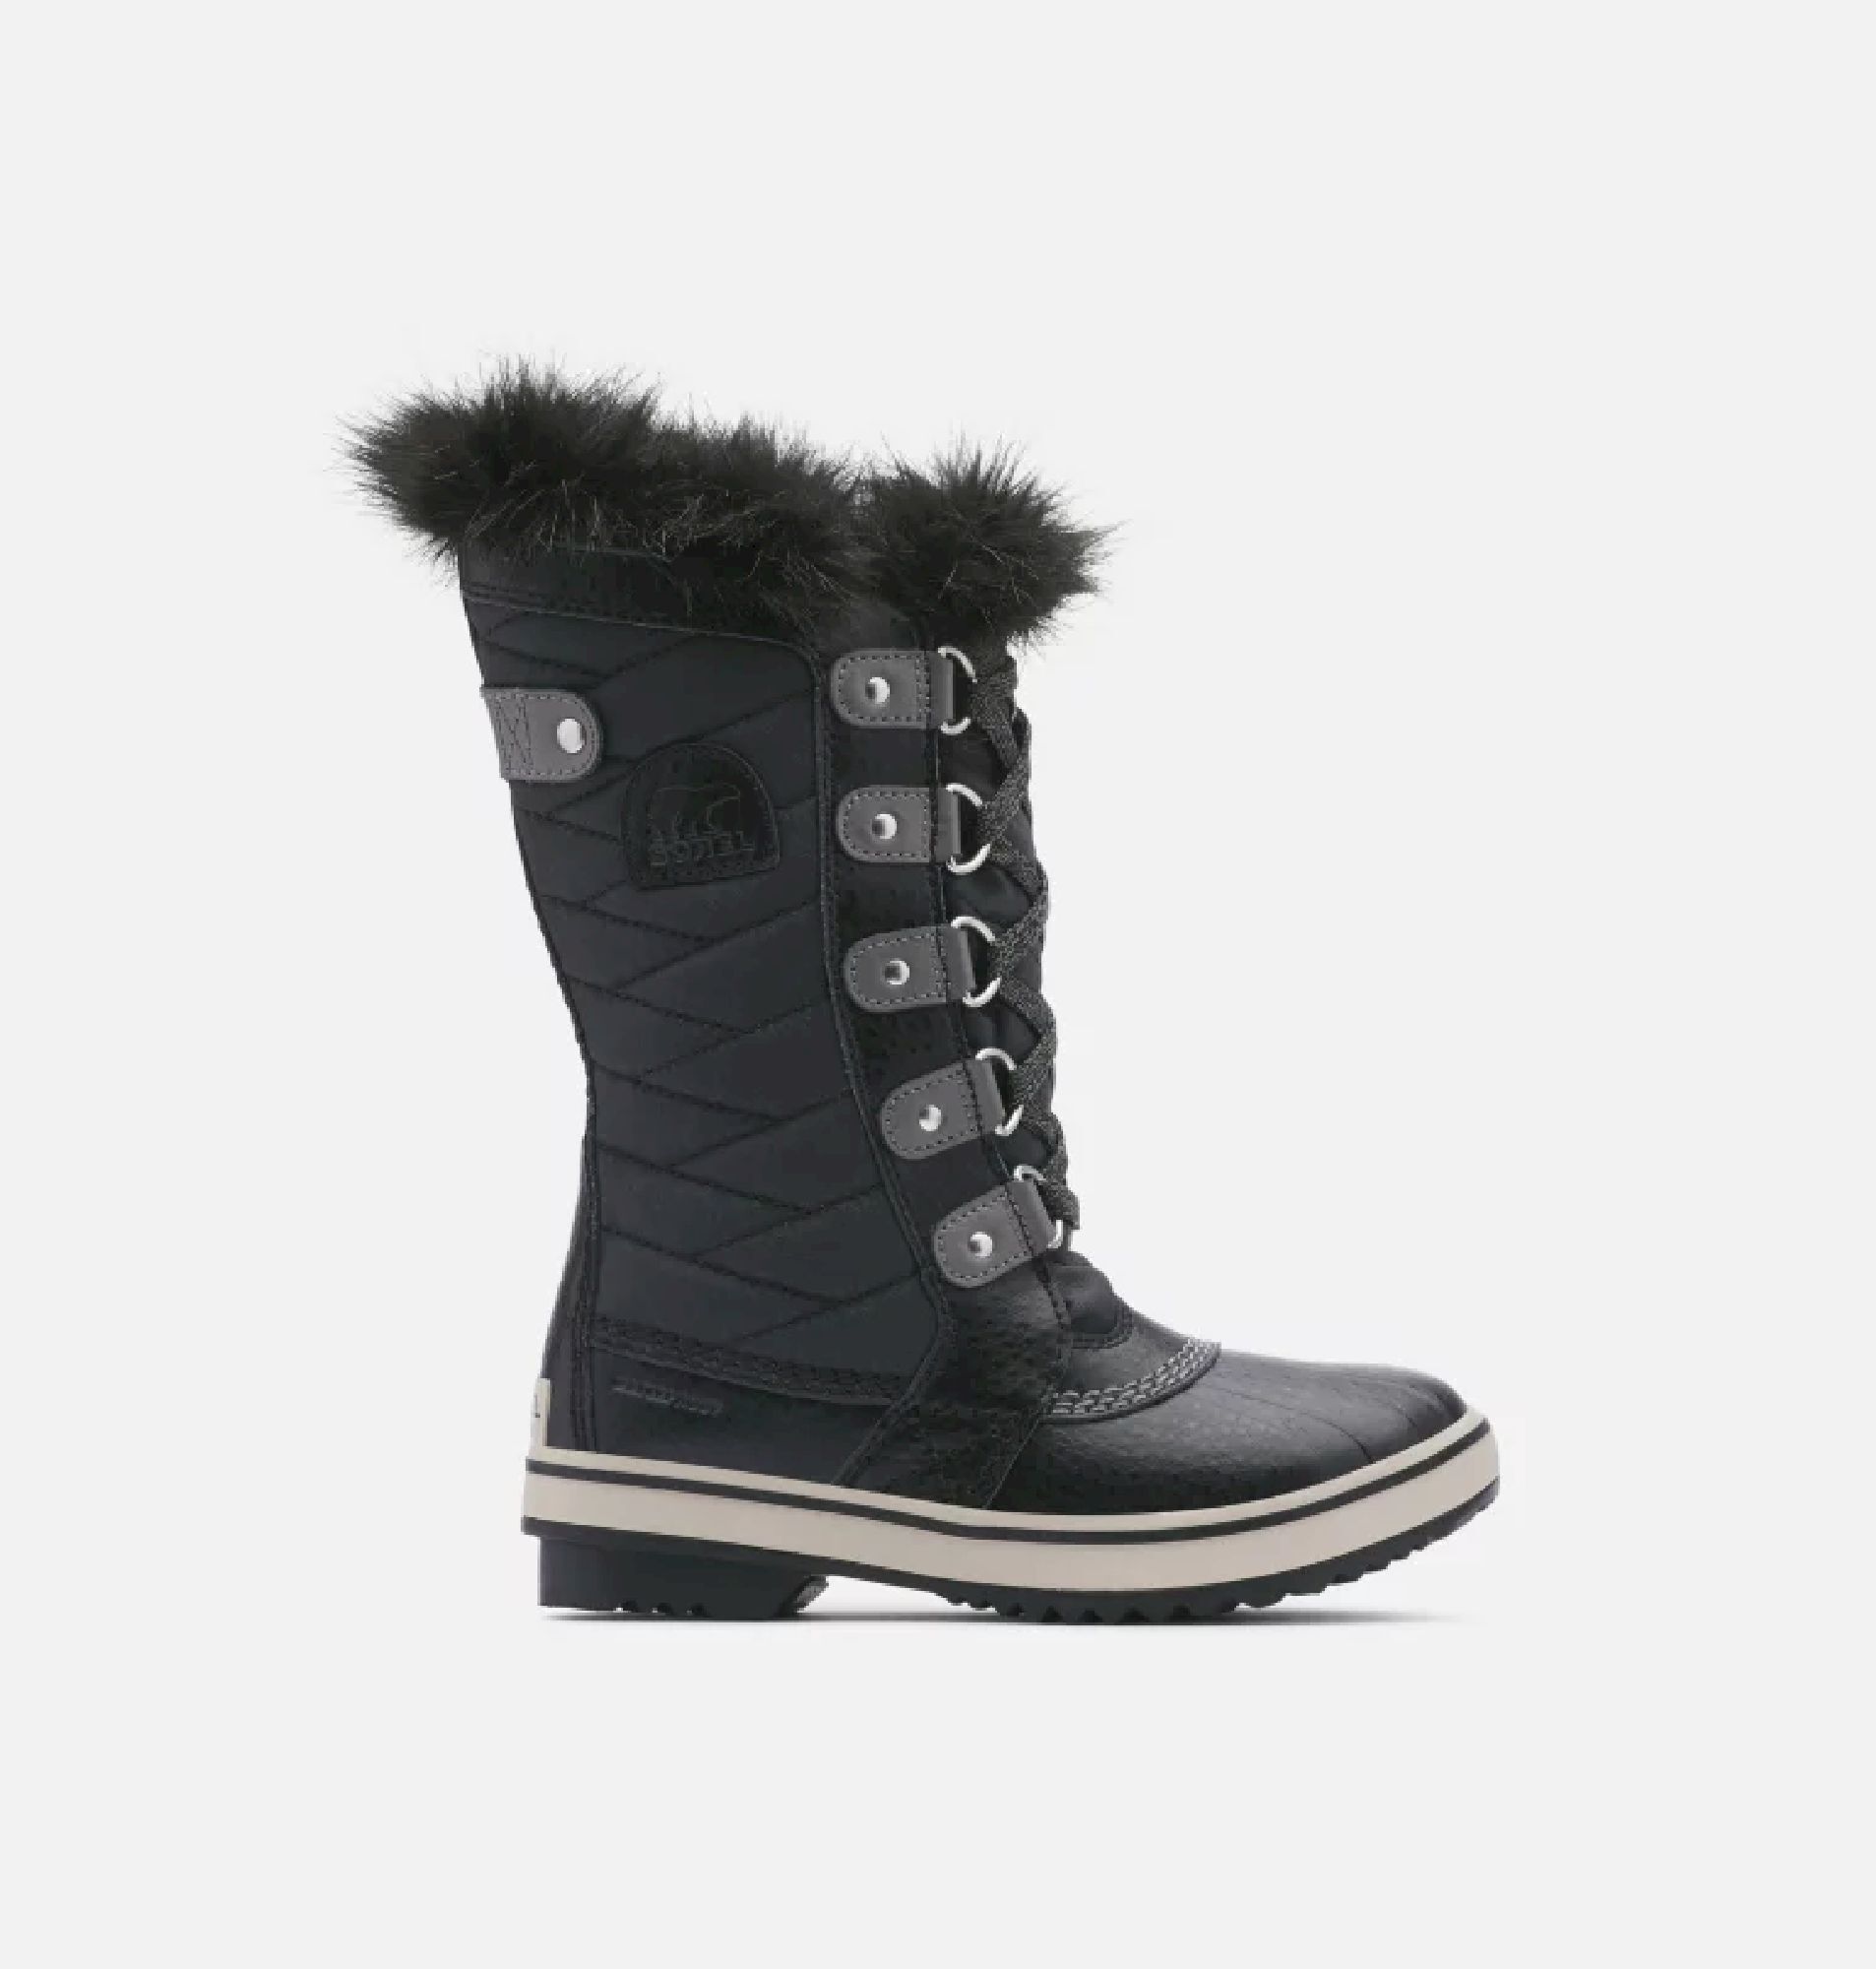 Sorel Youth Tofino II - Snow boots - Kids